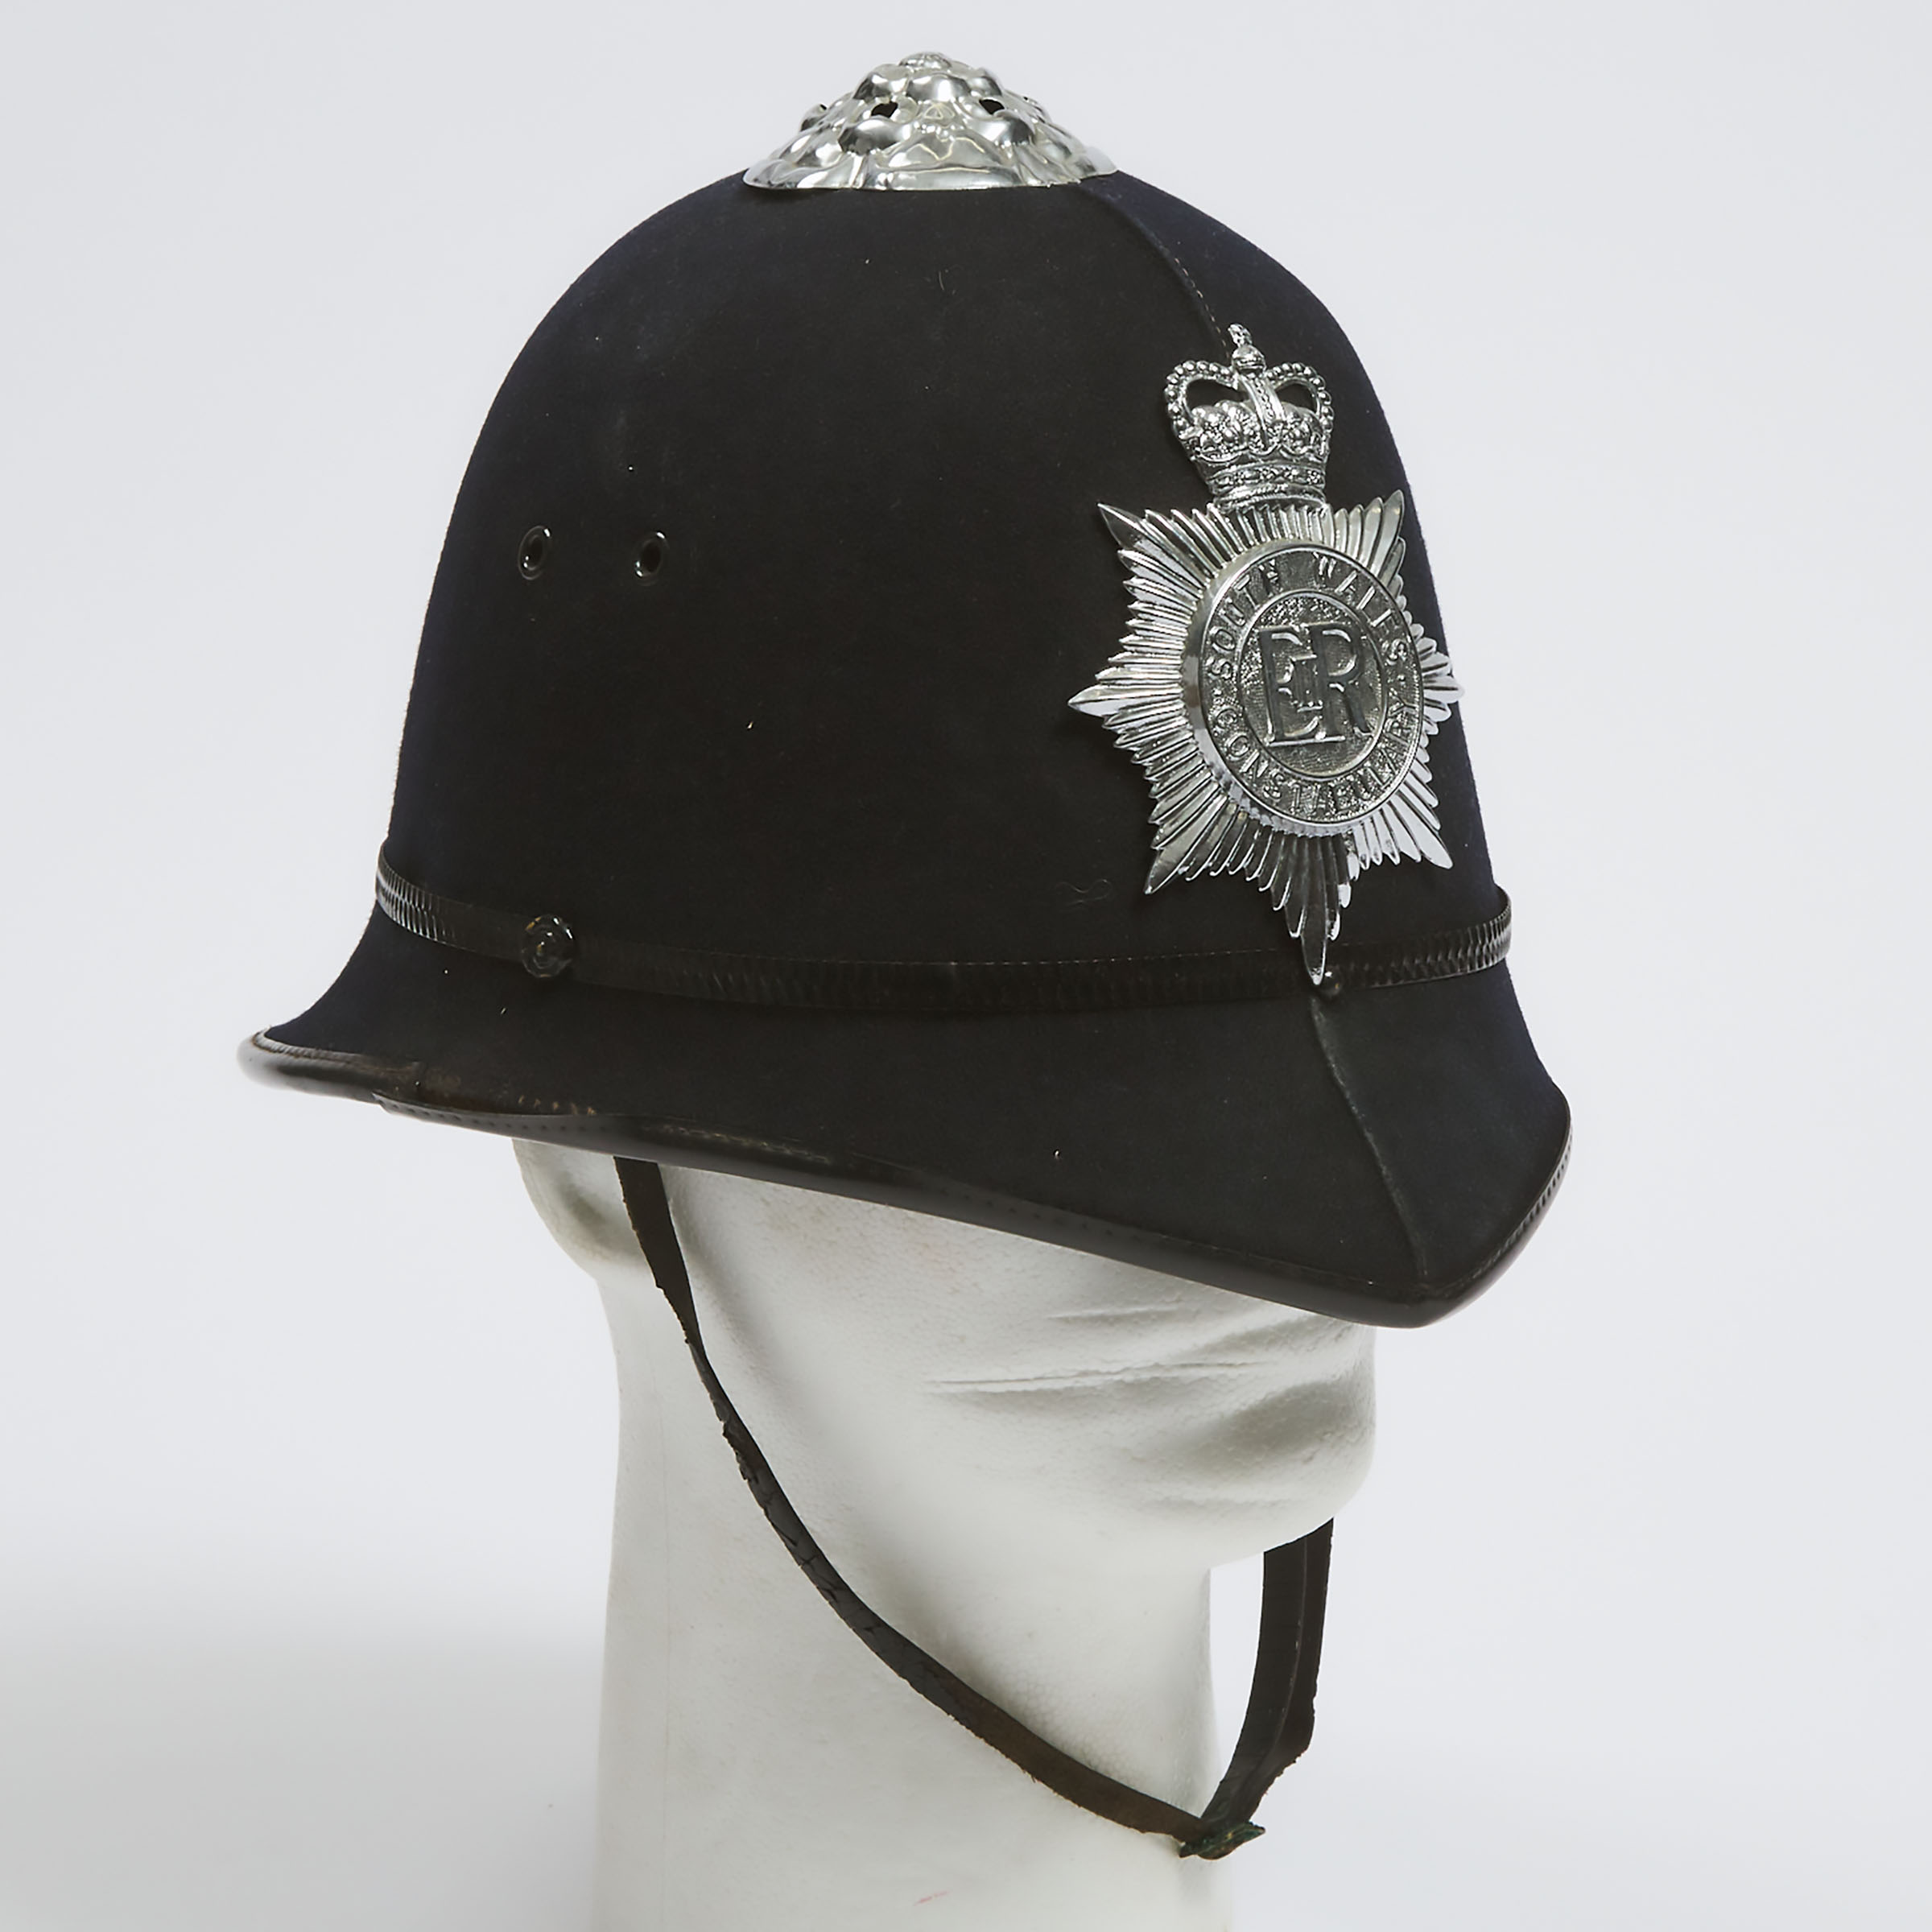 Elizabeth II South Wales Constabulary Police Helmet, mid 20th century